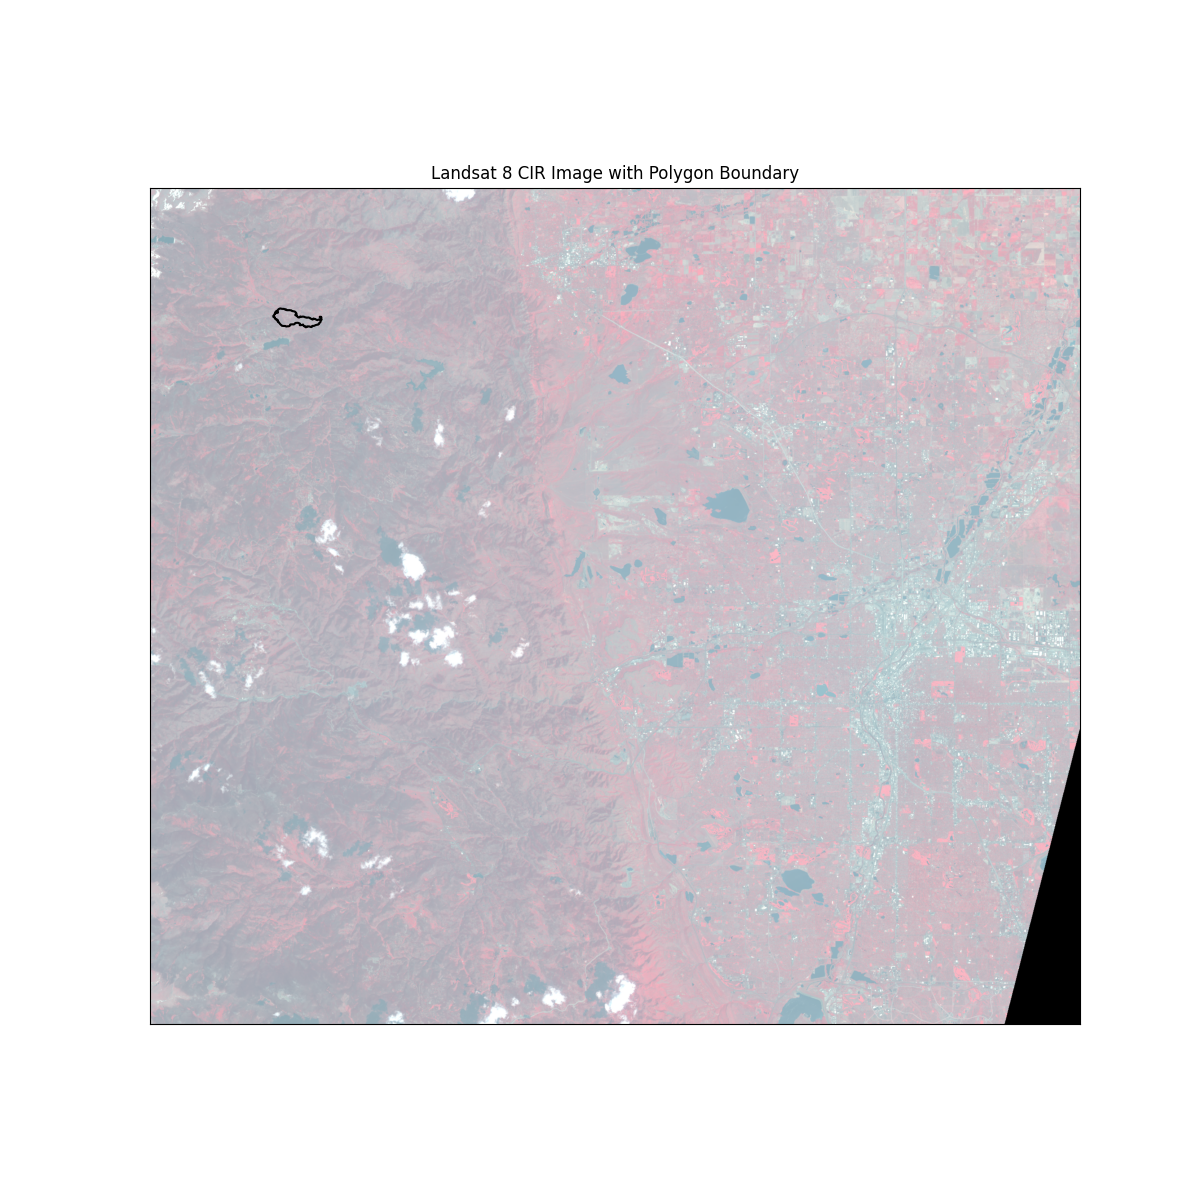 Landsat 8 CIR Image with Polygon Boundary